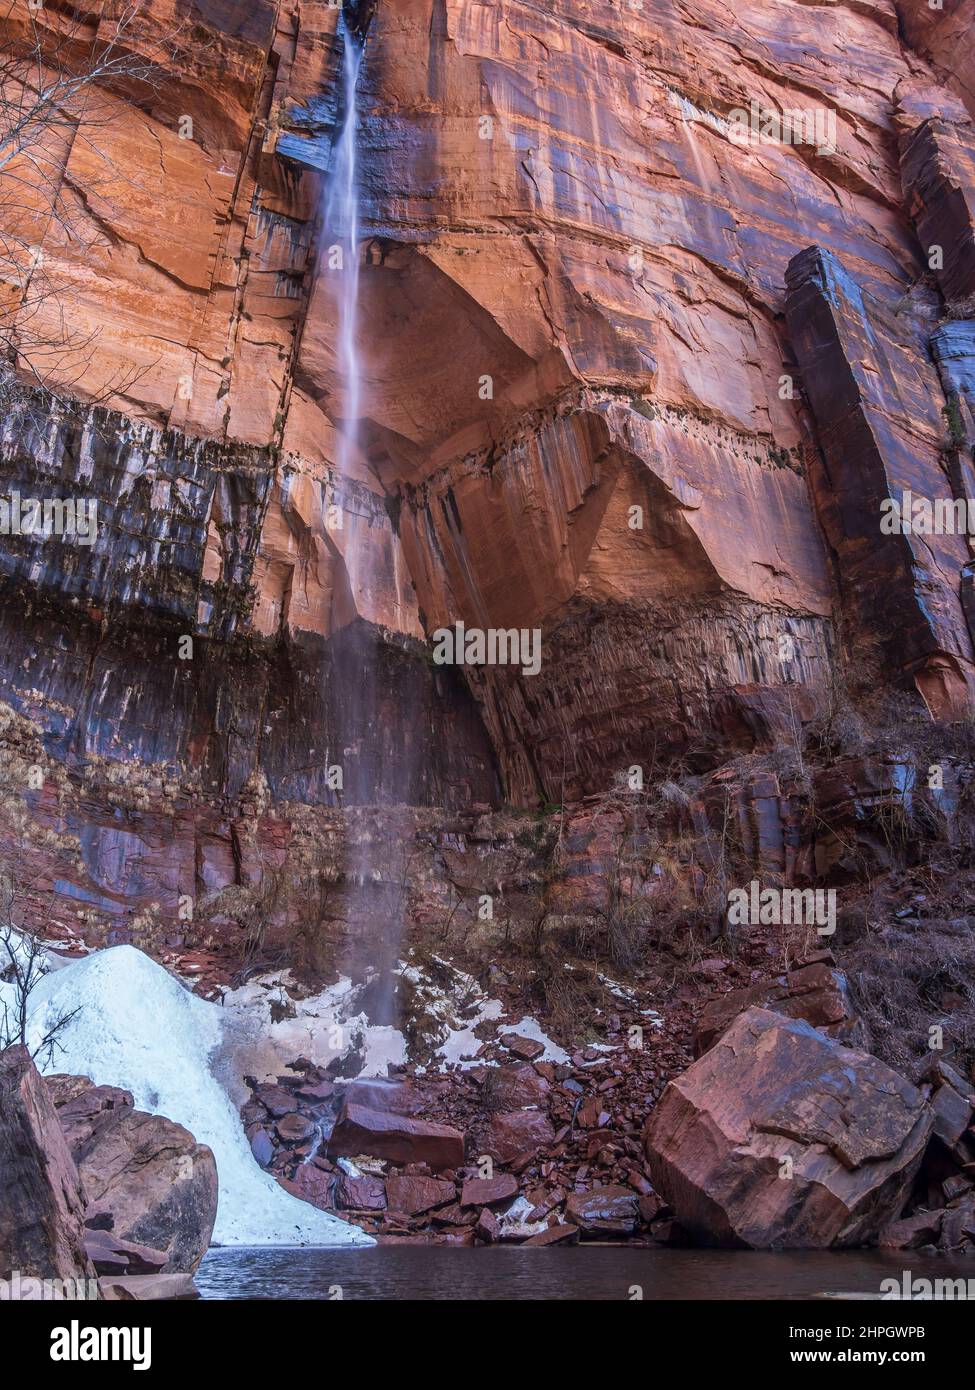 Waterfall feeding Upper Emerald Pool, Zion National Park, Utah. Stock Photo